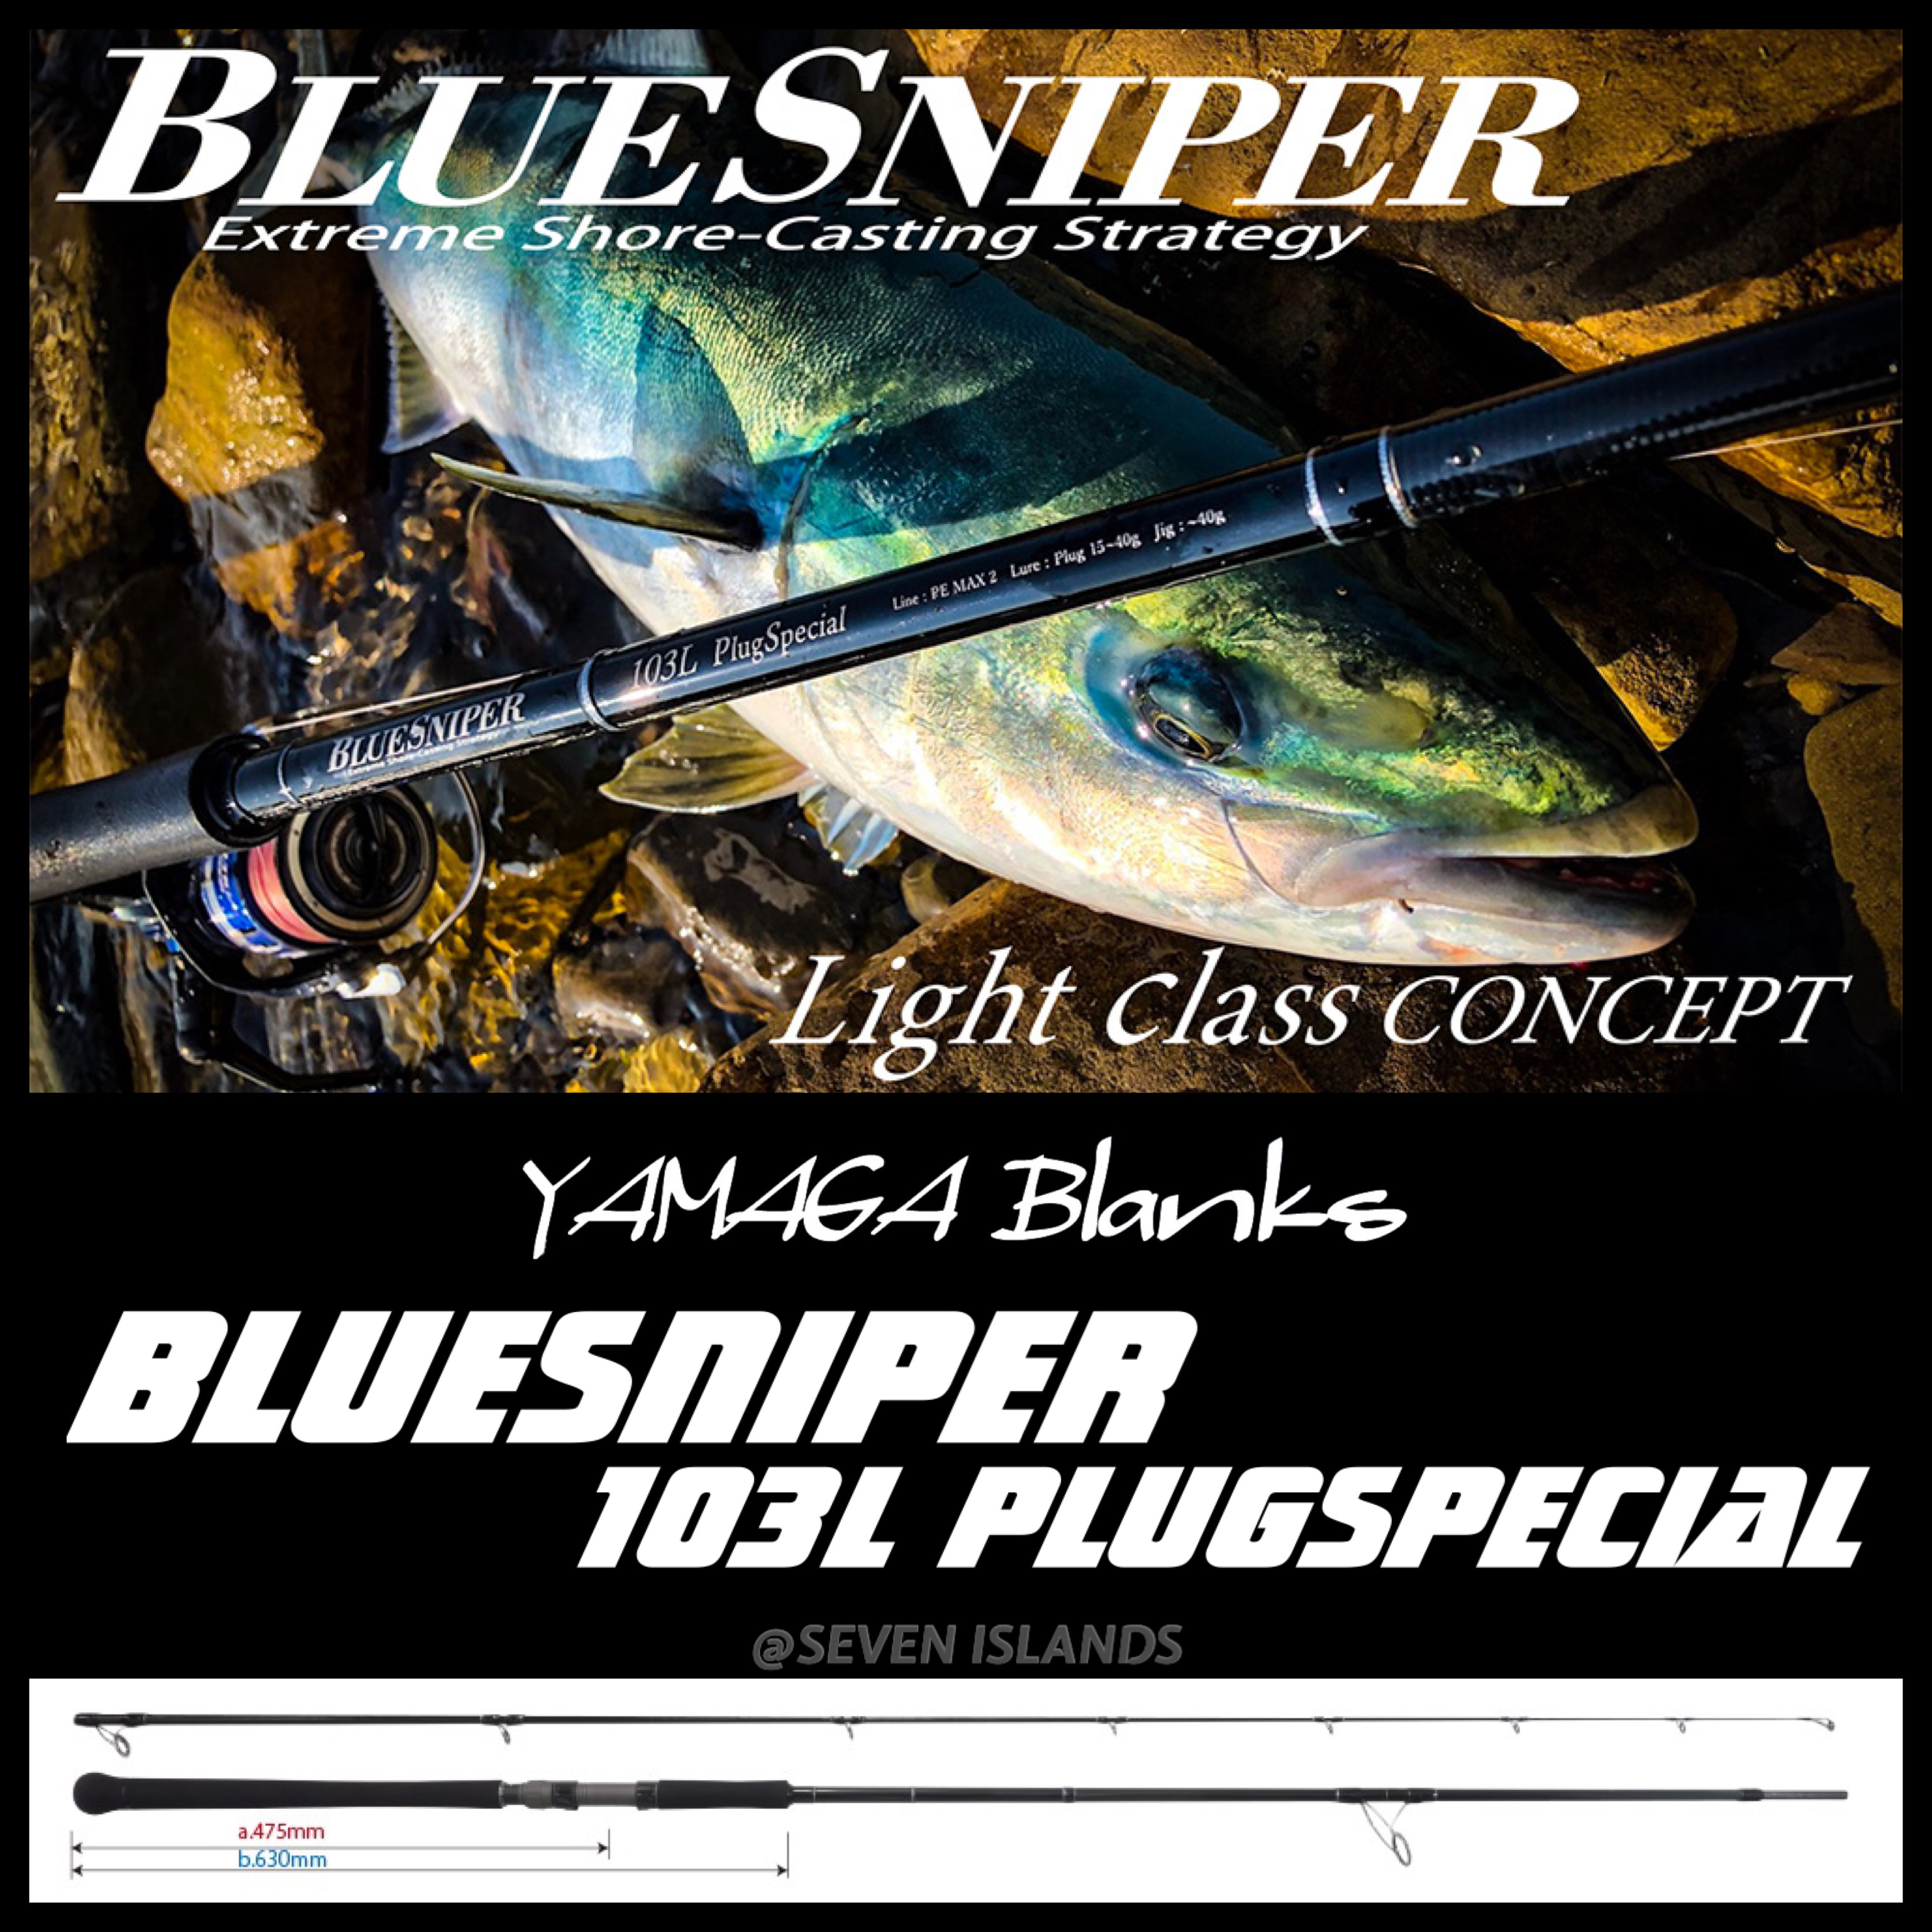 Yamaga Blanks Blue Sniper 103L Plug Special / Light Class Concept